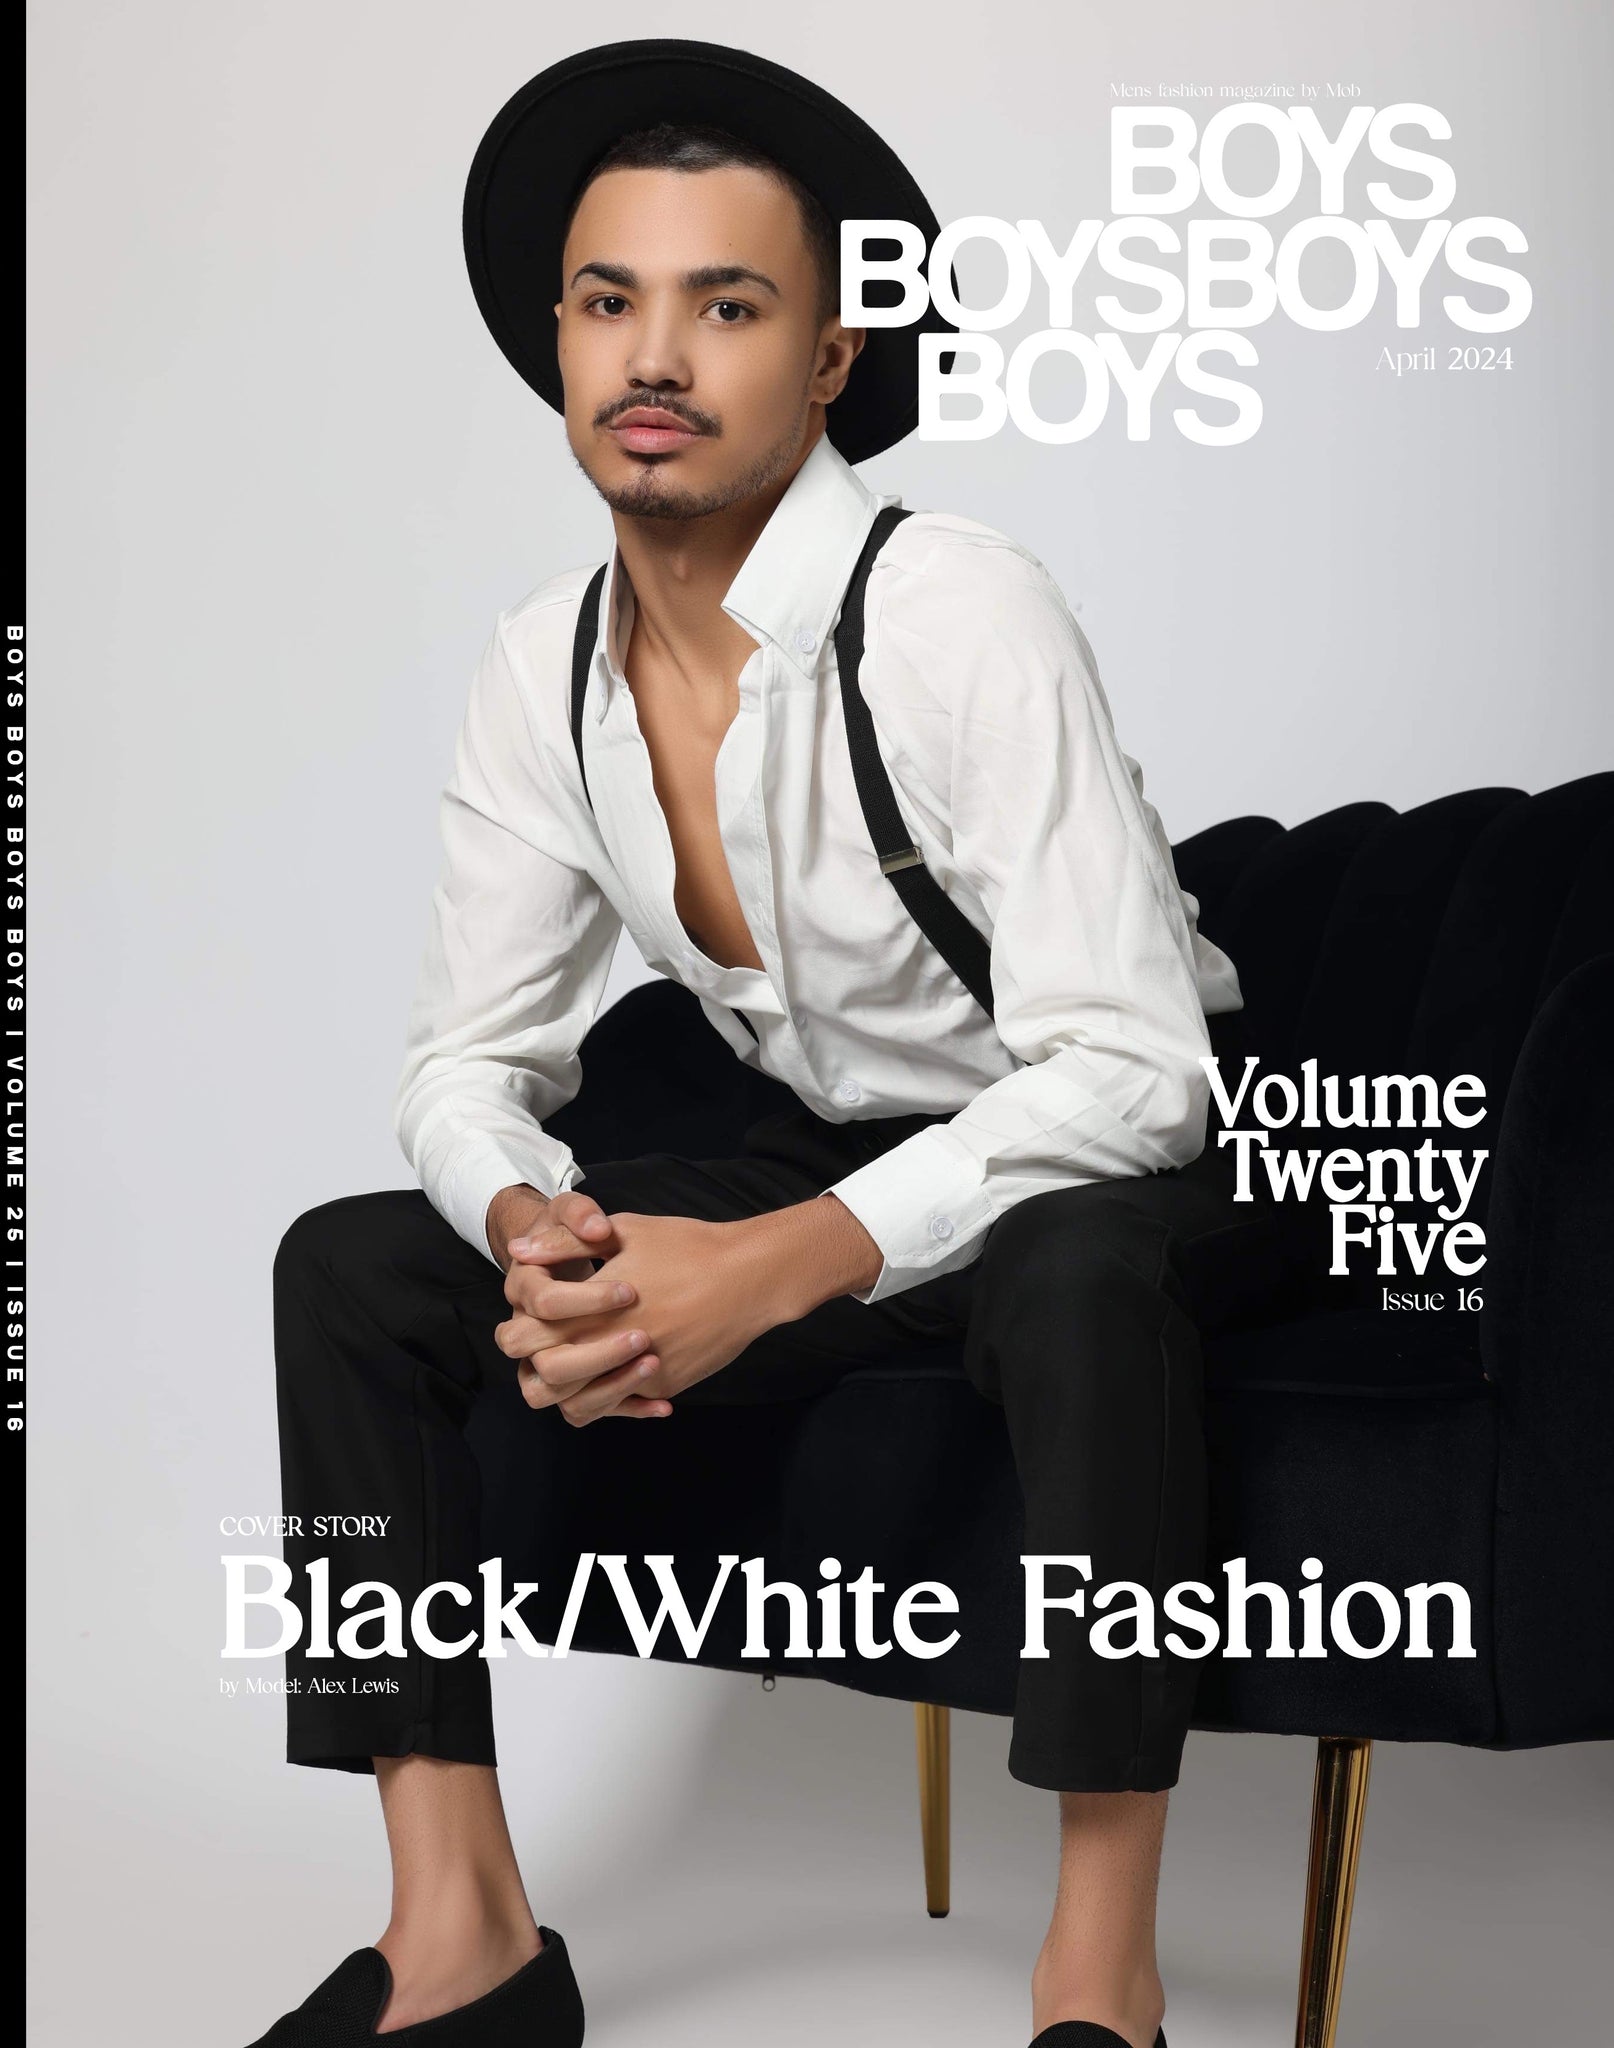 BOYS BOYS BOYS BOYS | VOLUME TWENTY FIVE | ISSUE #16